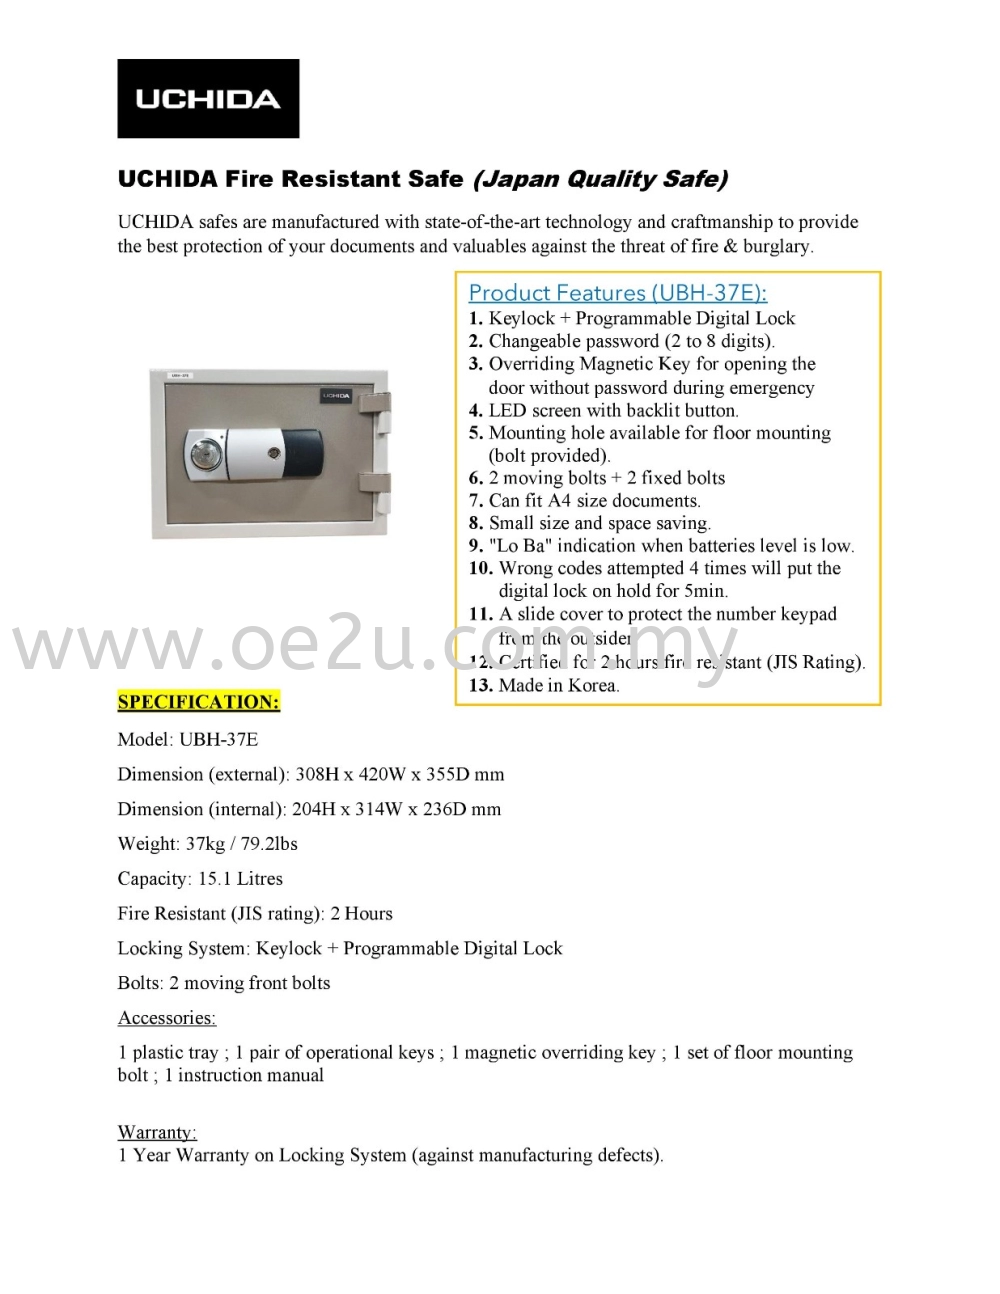 UCHIDA UBH-37E Fire Resistant Safe Box (Digital Lock)_37kg